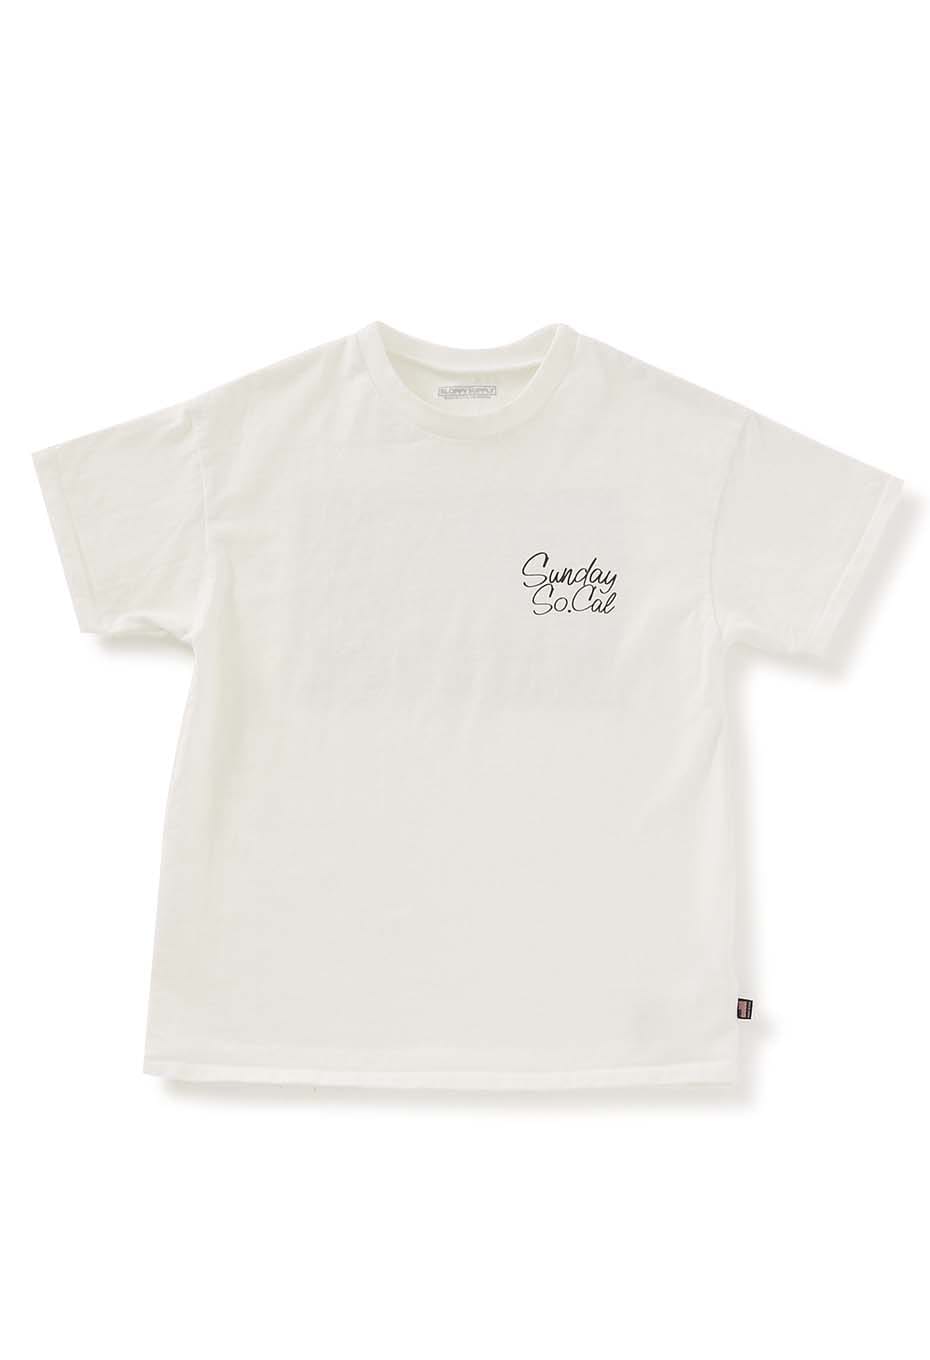 SLOPPY SUPPLY / SUNDAY SO.CAL Tシャツ